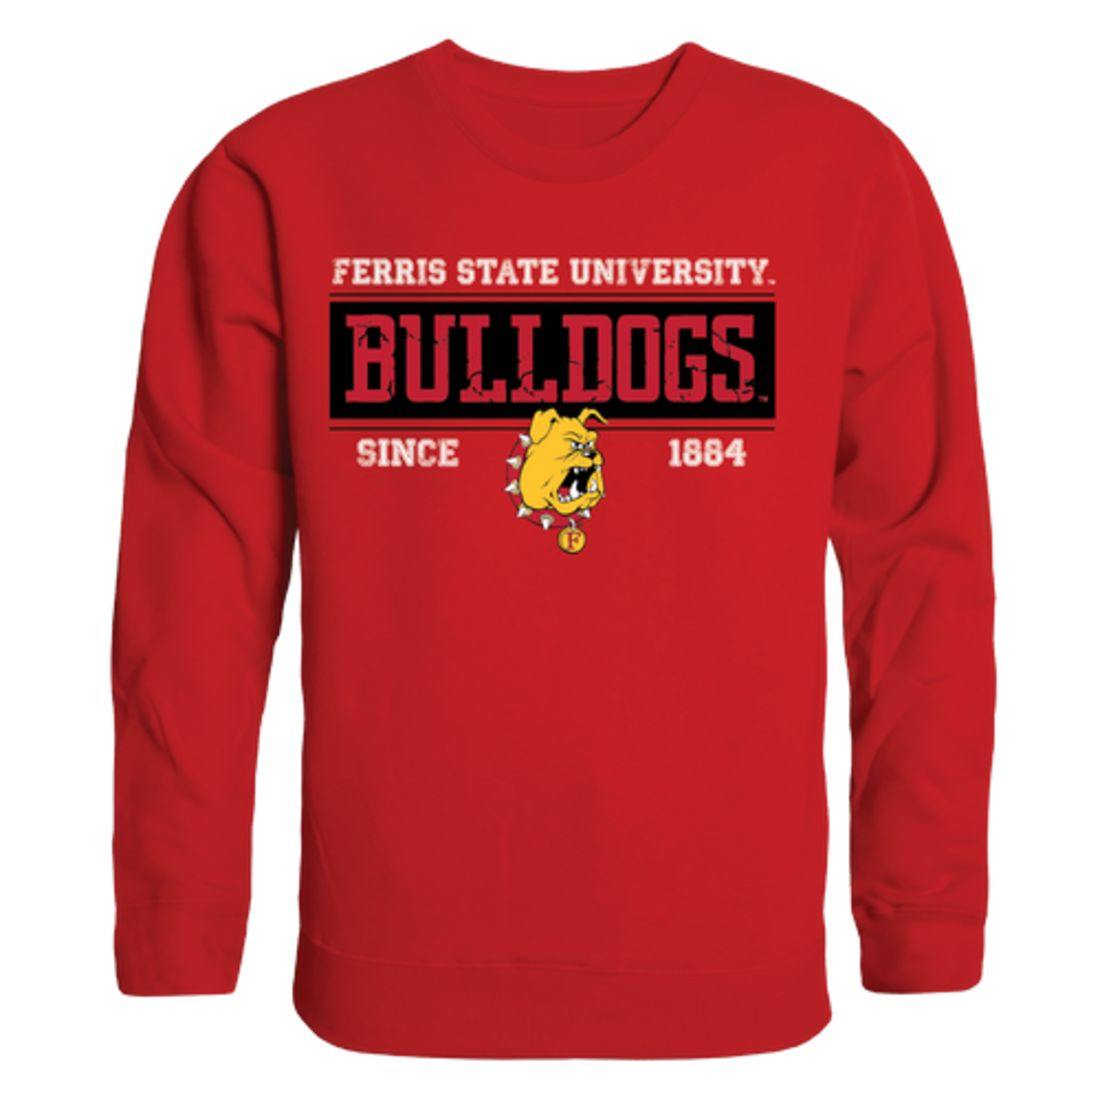 FSU Ferris State University Bulldogs Established Crewneck Pullover Sweatshirt Sweater Red-Campus-Wardrobe